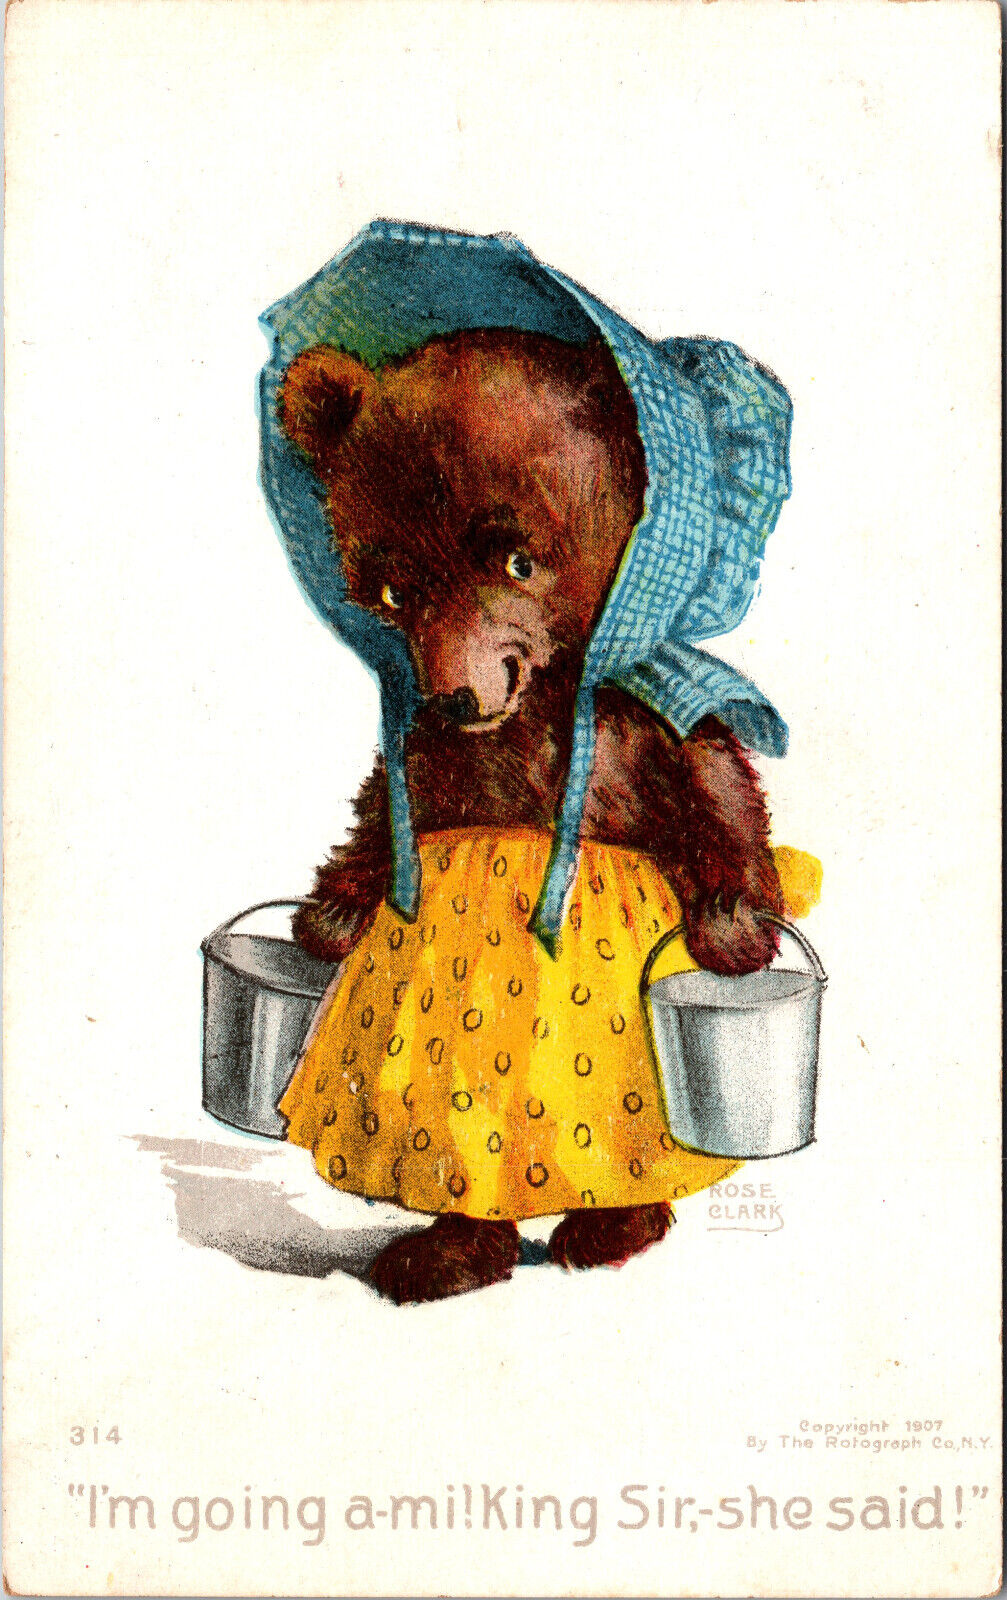 Bear Milk Bonnet Anthropomorphic Rose Clark Rotograph Co Posted Antique Postcard